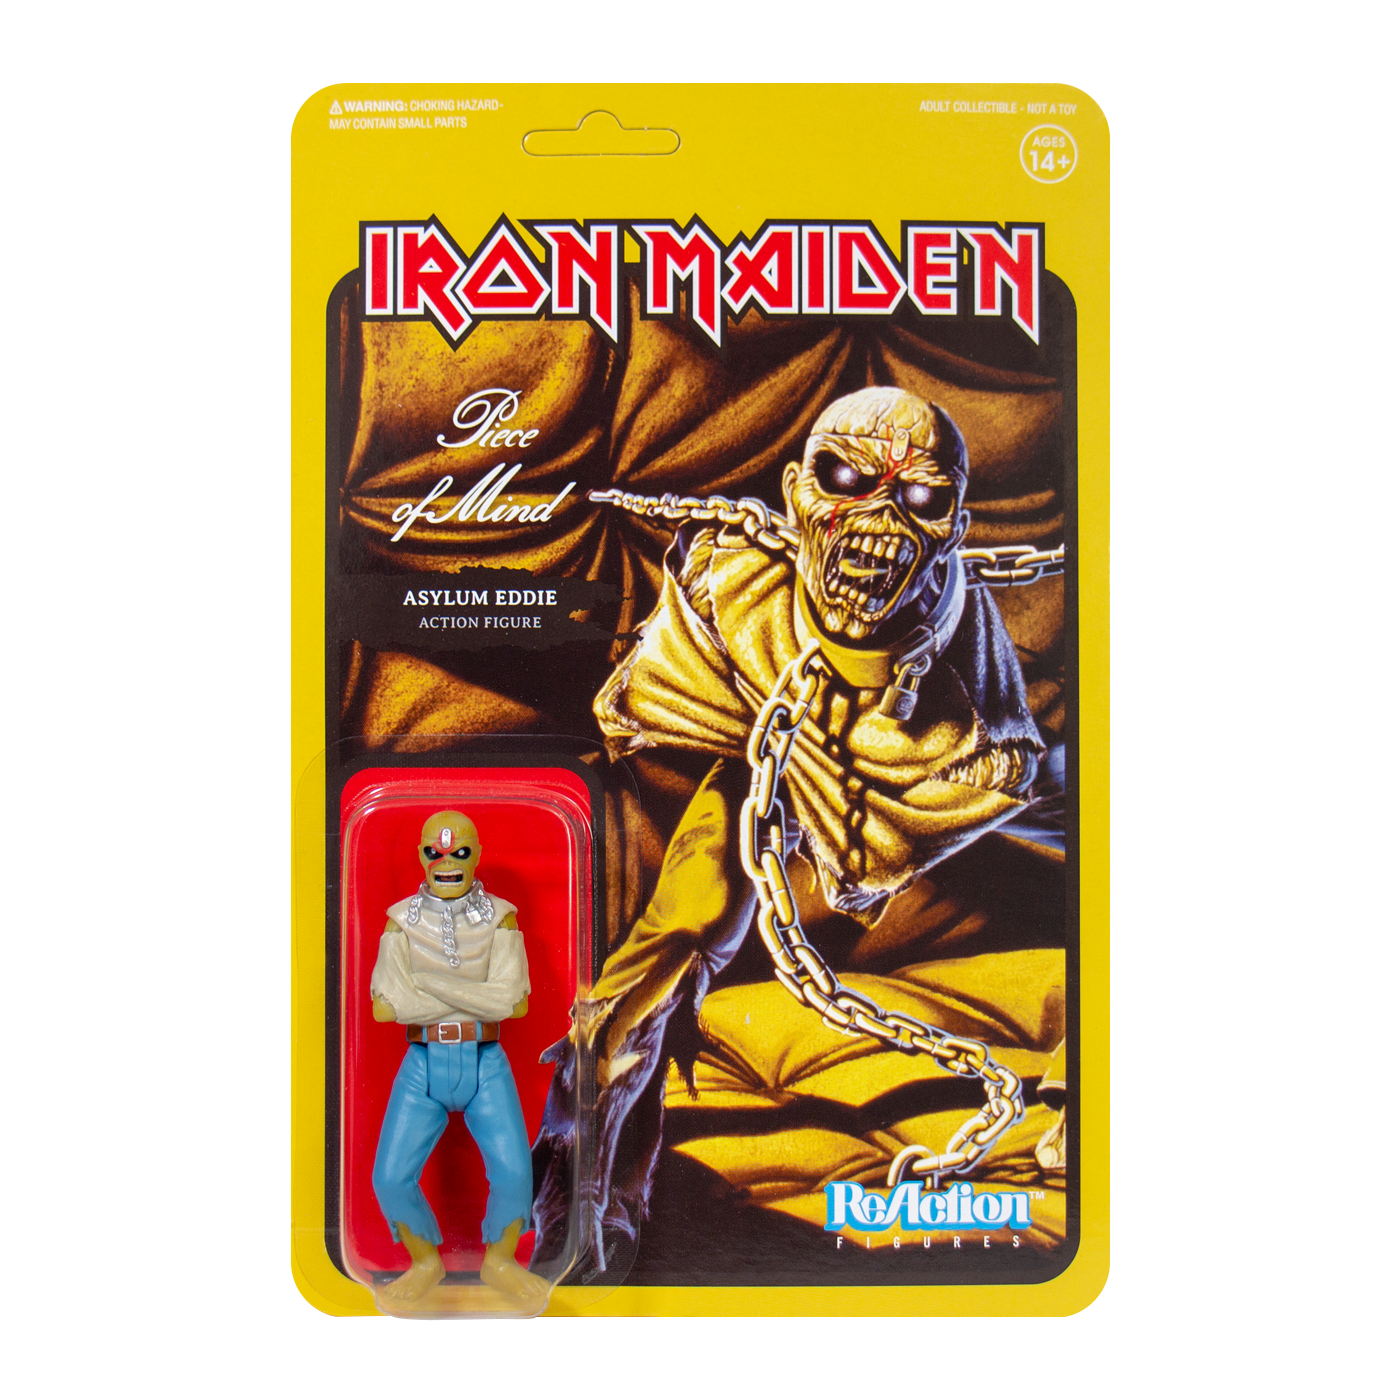 Iron Maiden ReAction Figure - Piece of Mind (Album Art)